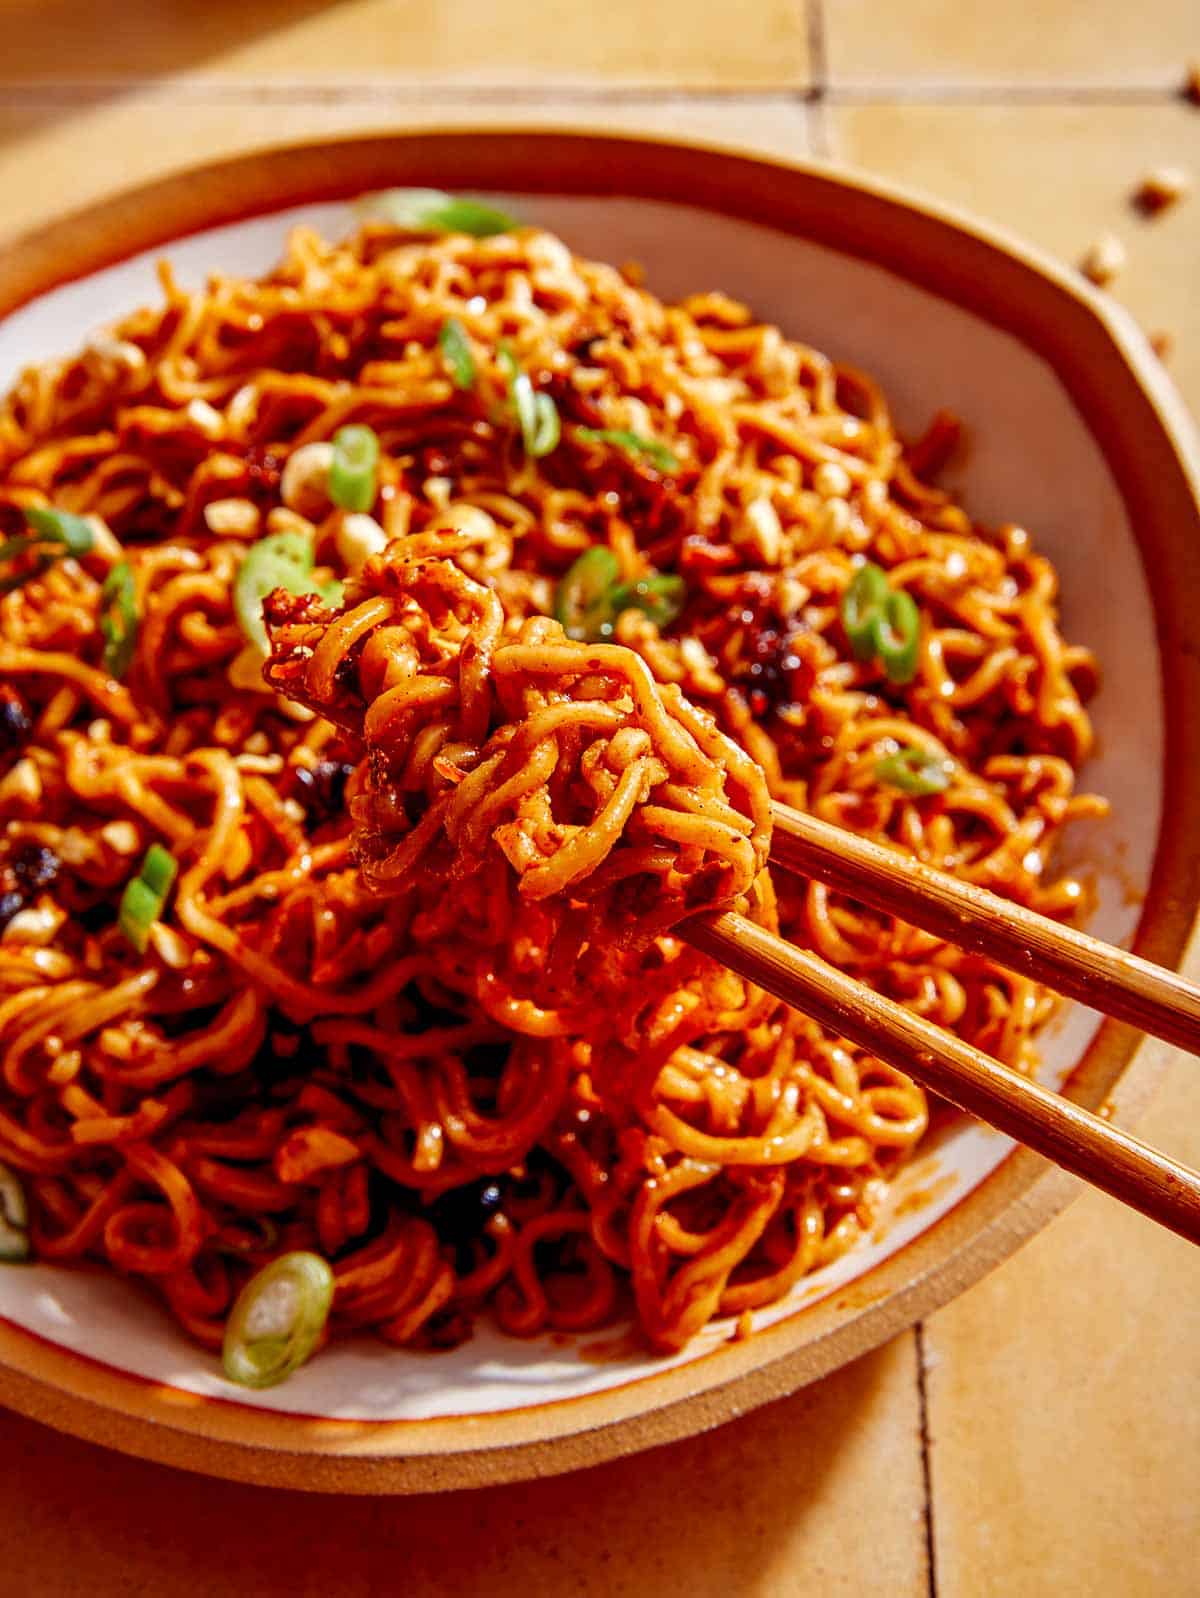 Spicy ramen noodles in a bowl.